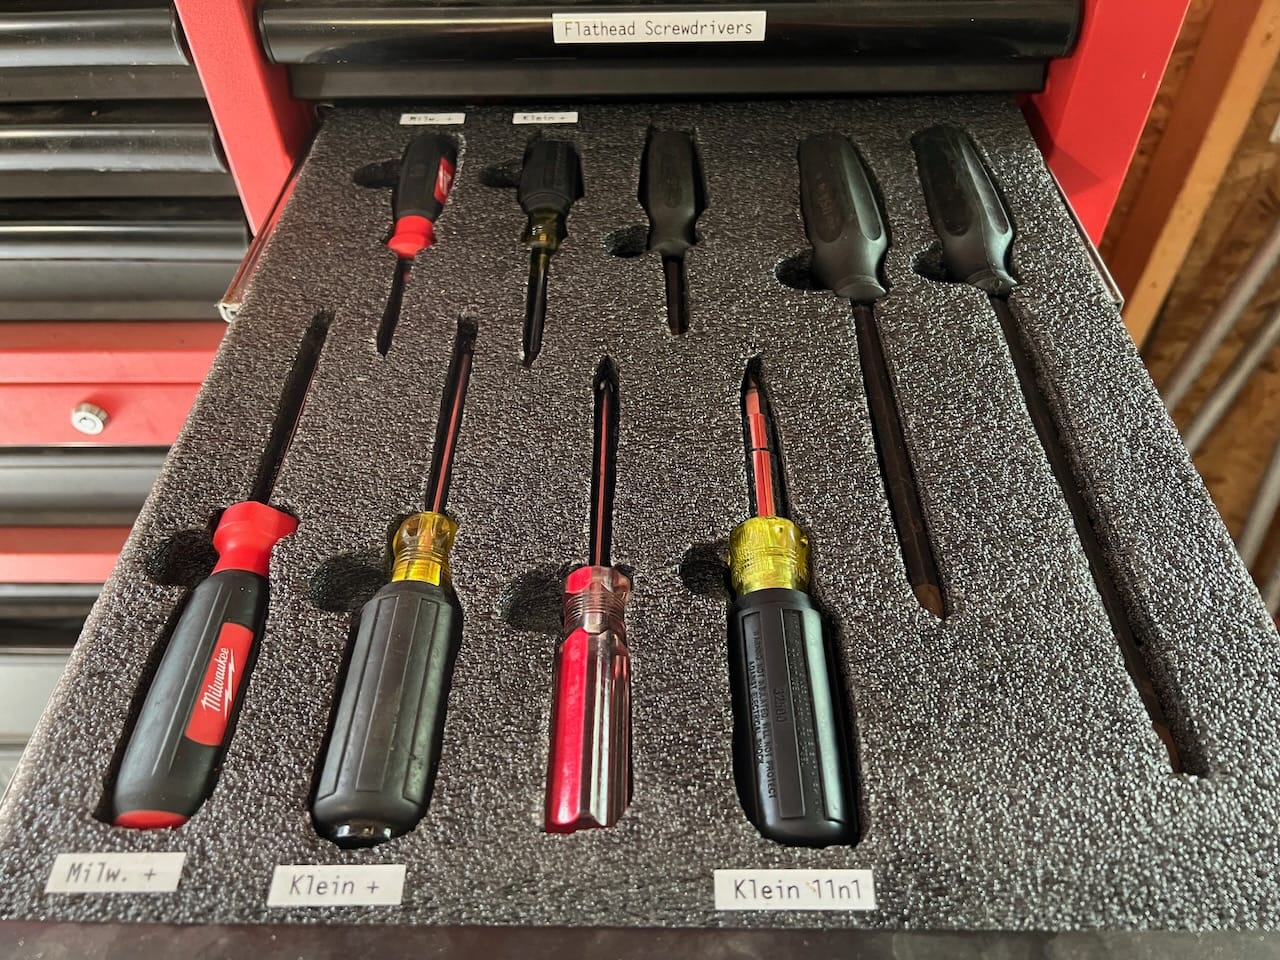 Phillips screwdrivers organized in Kaizen Foam.